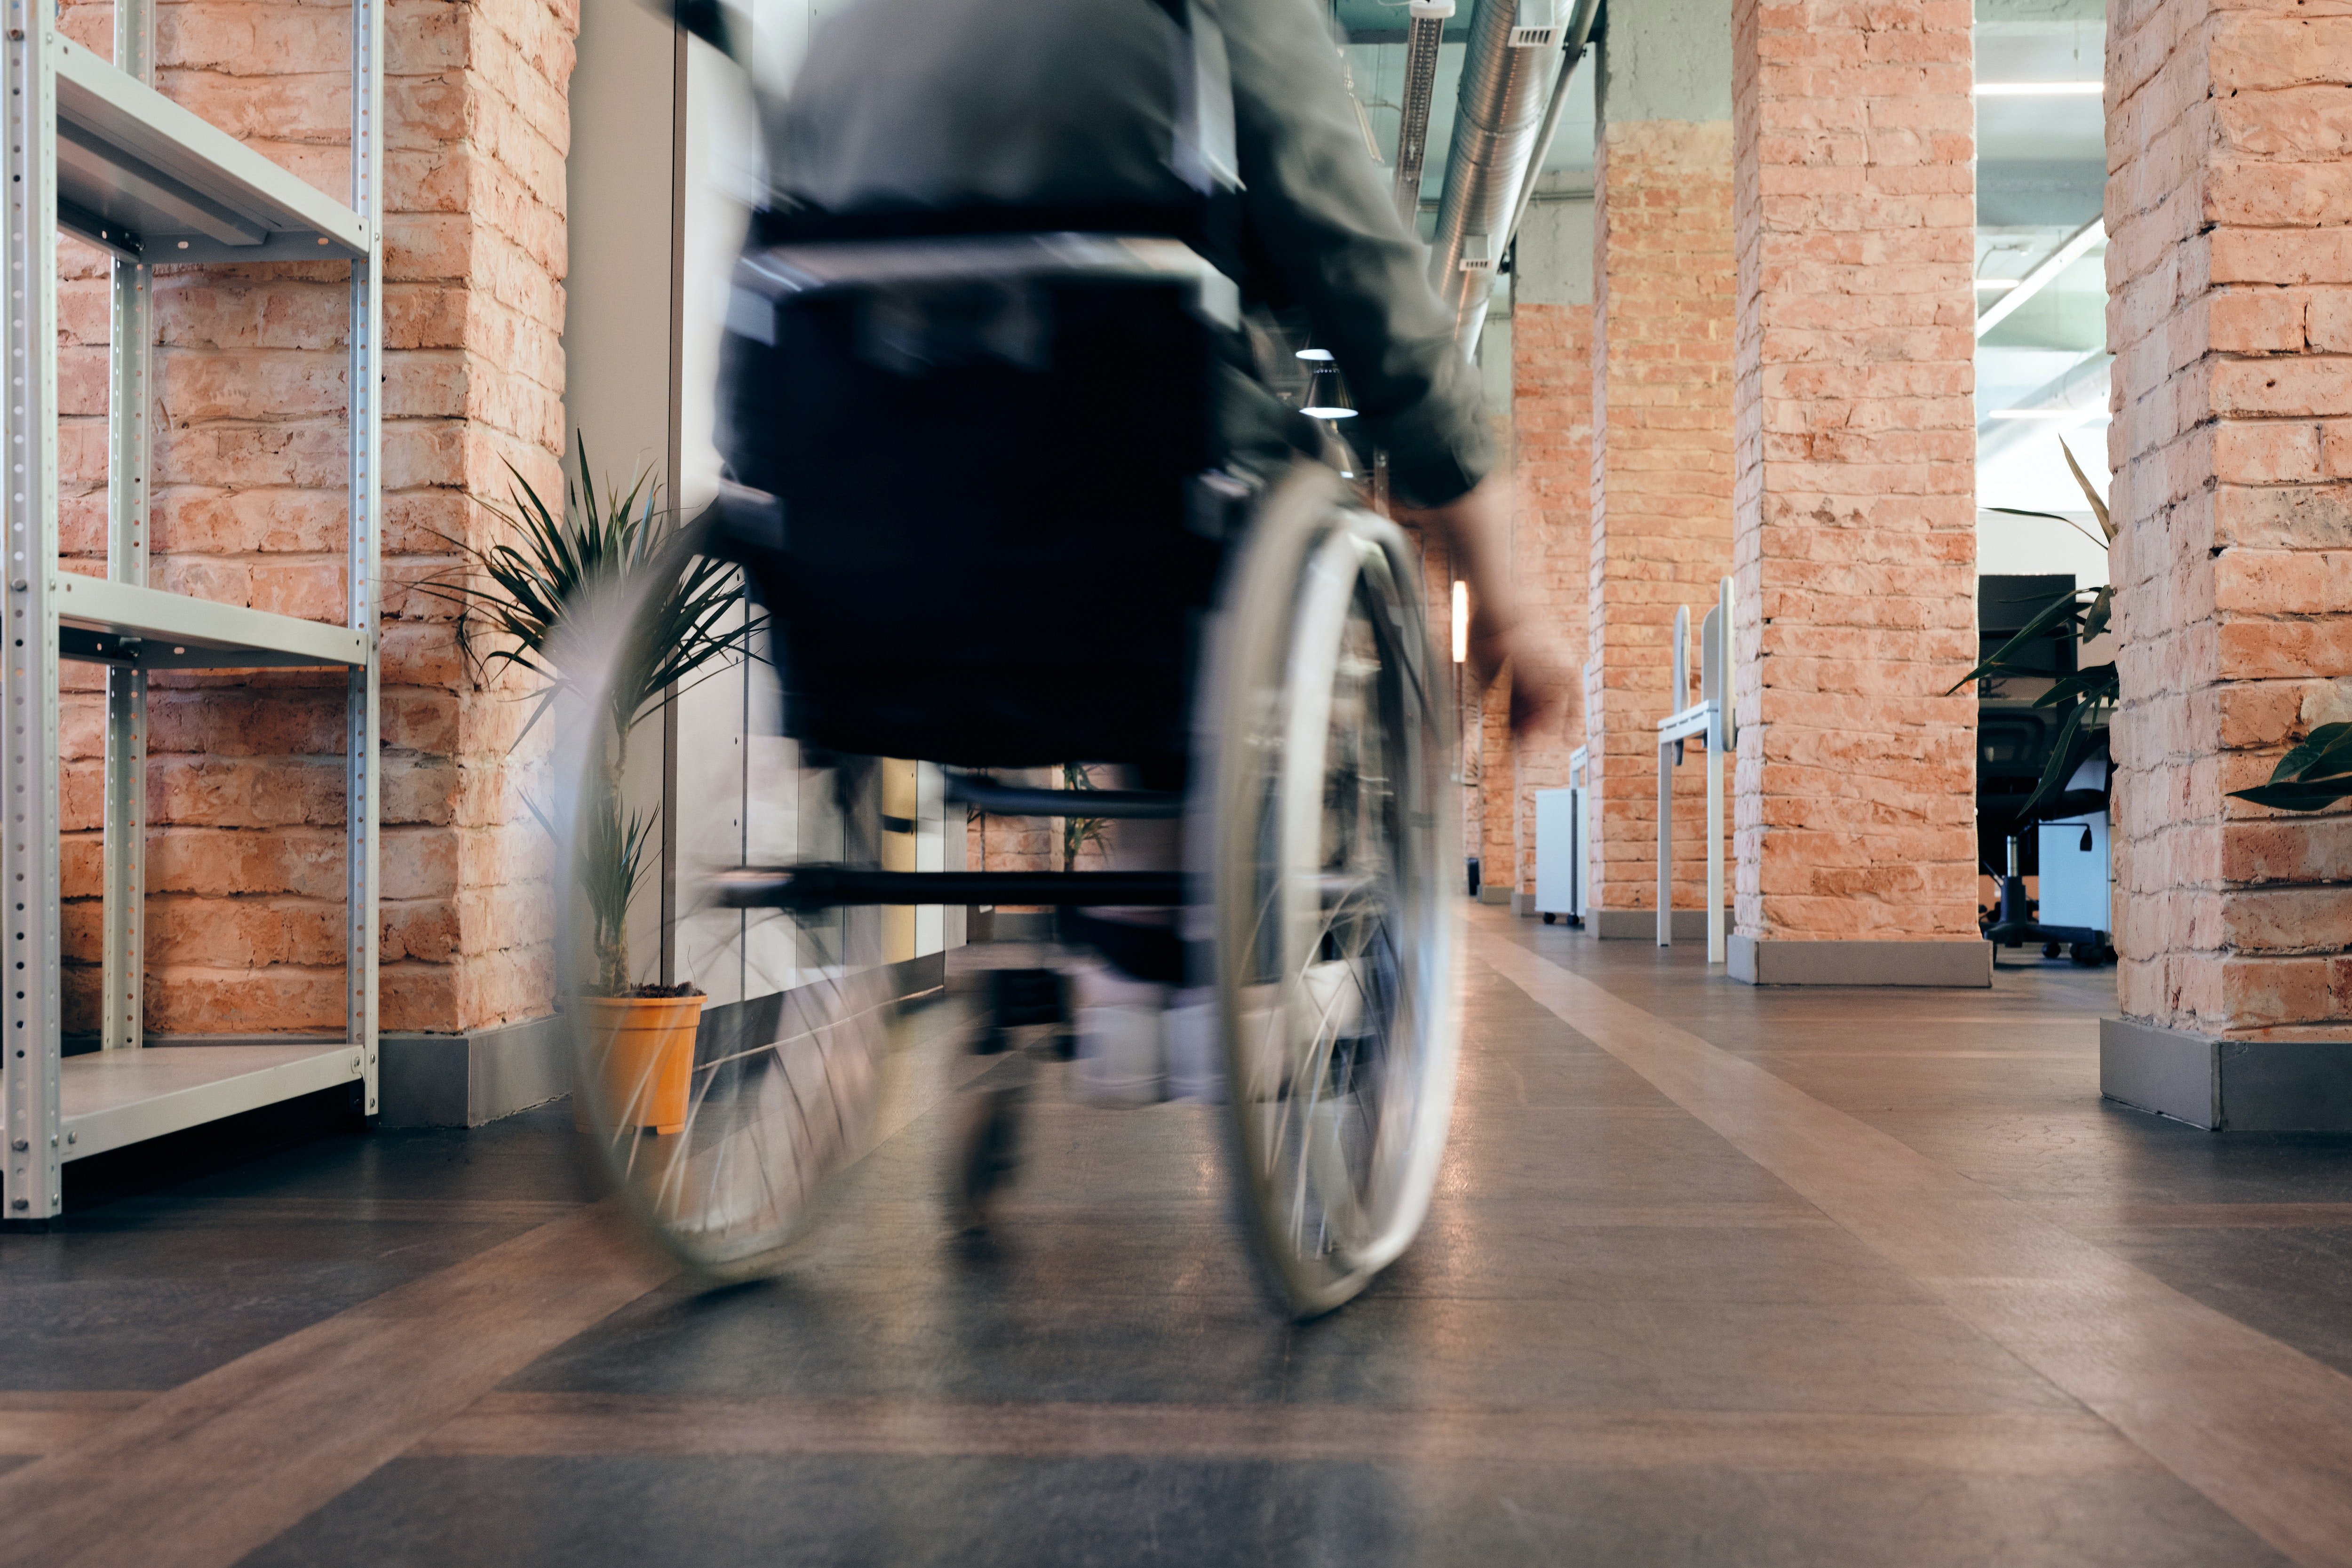 An elderly man in a wheelchair entered the restaurant. | Source: Pexels